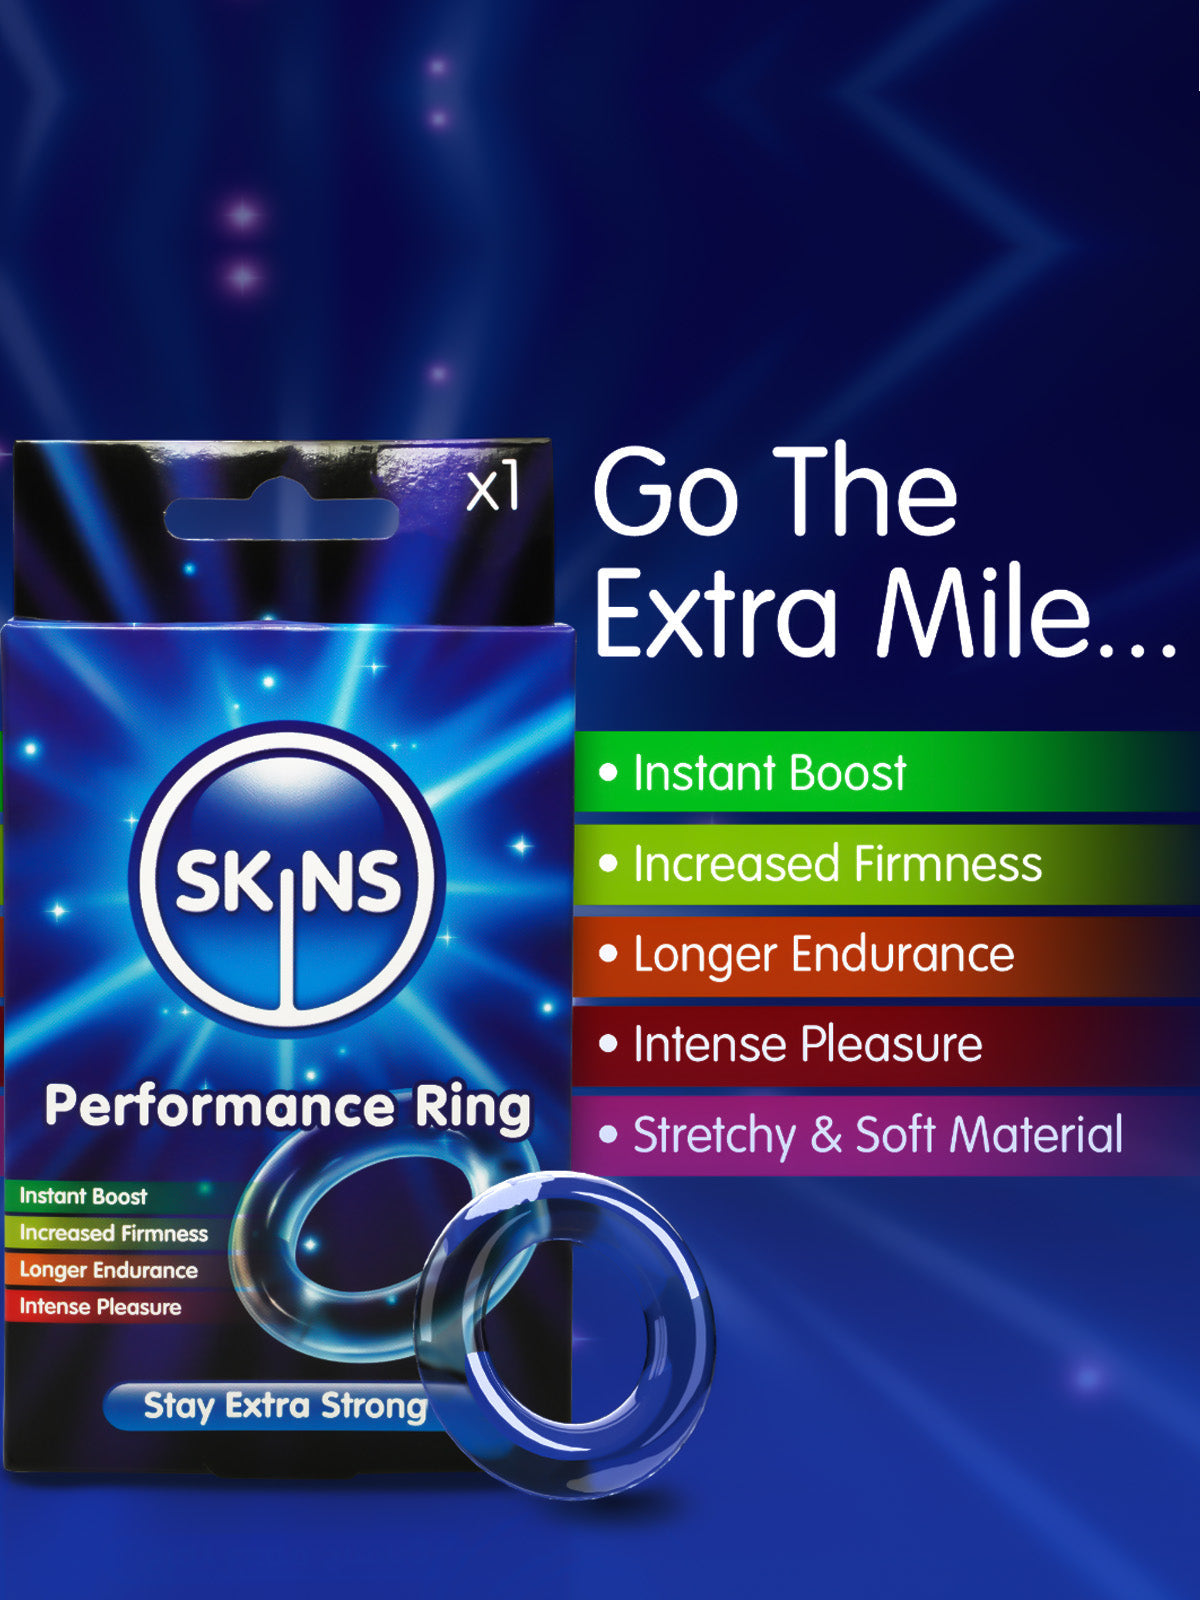 Skins Performance Ring 1 Pack